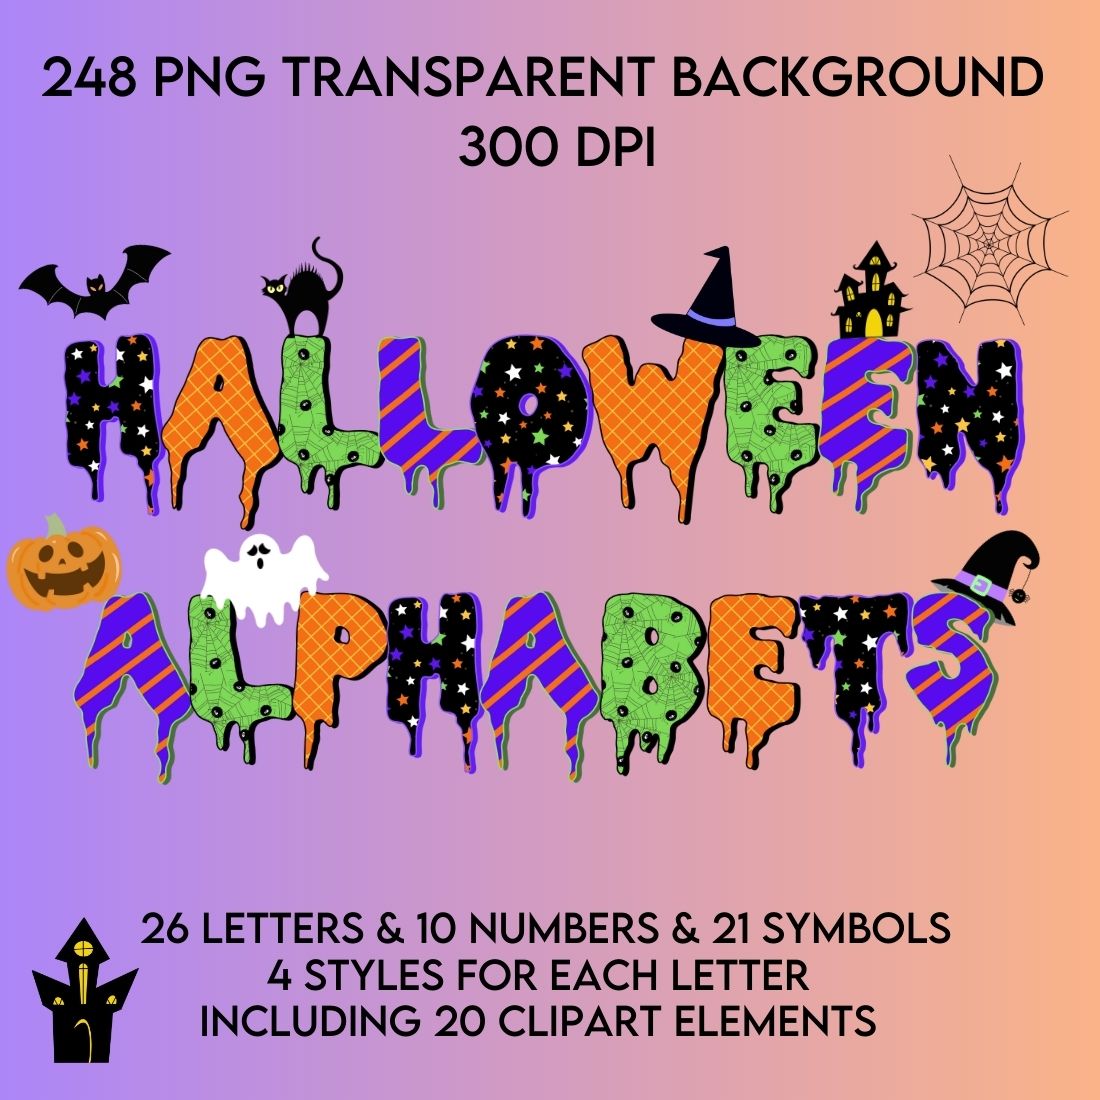 Halloween Alphabets 248 PNG Transparent Background cover image.